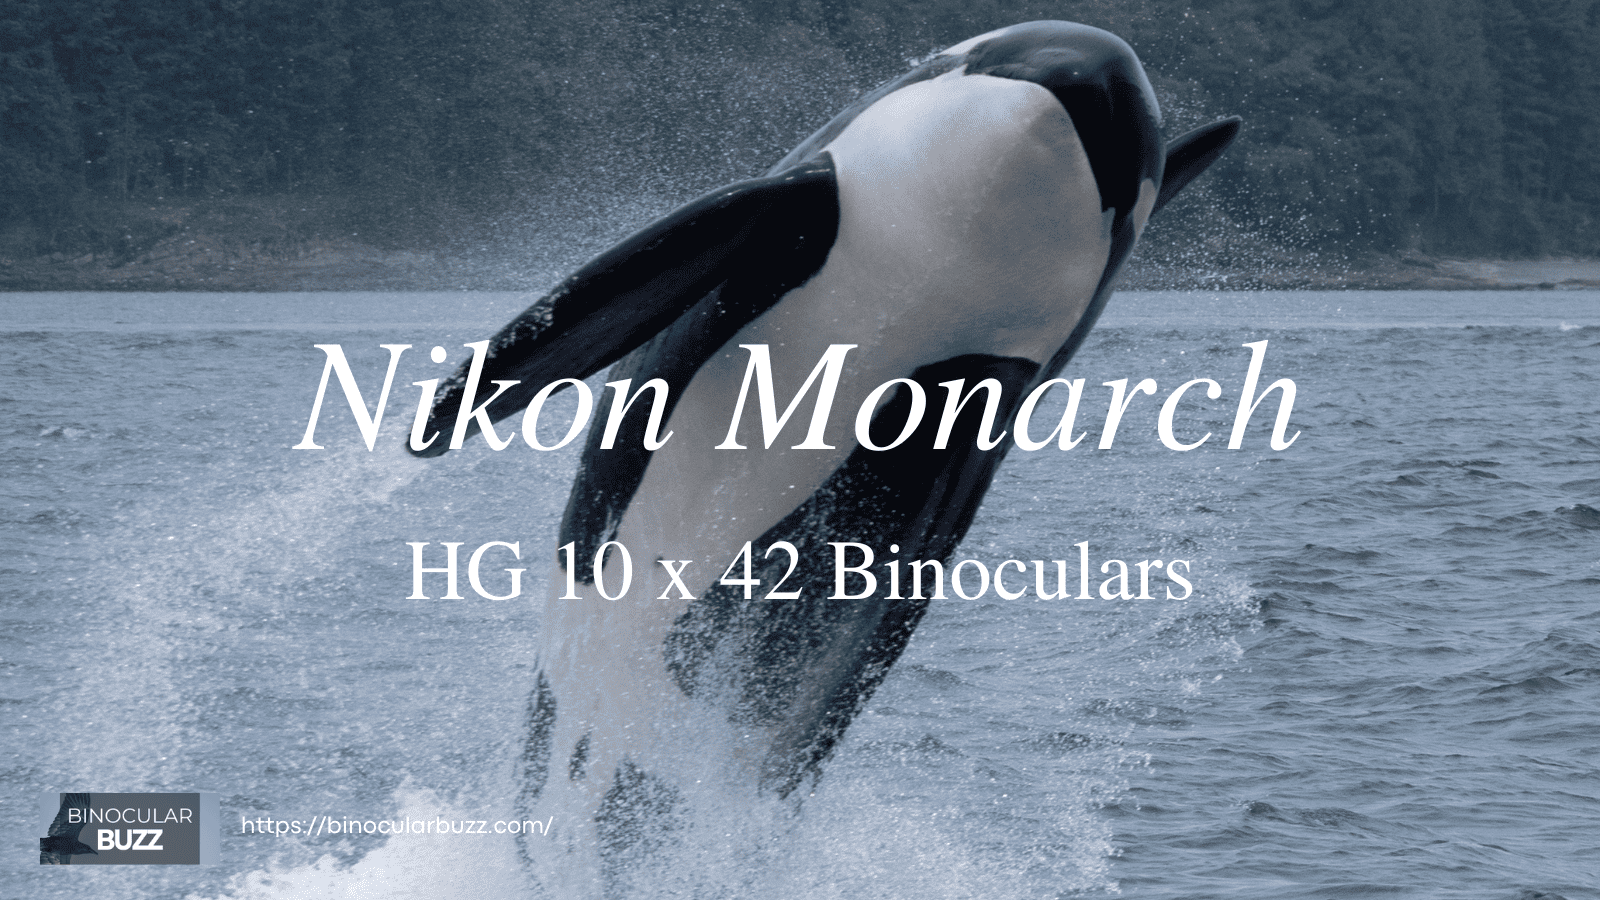 Nikon Monarch HG 10 x 42 Binoculars